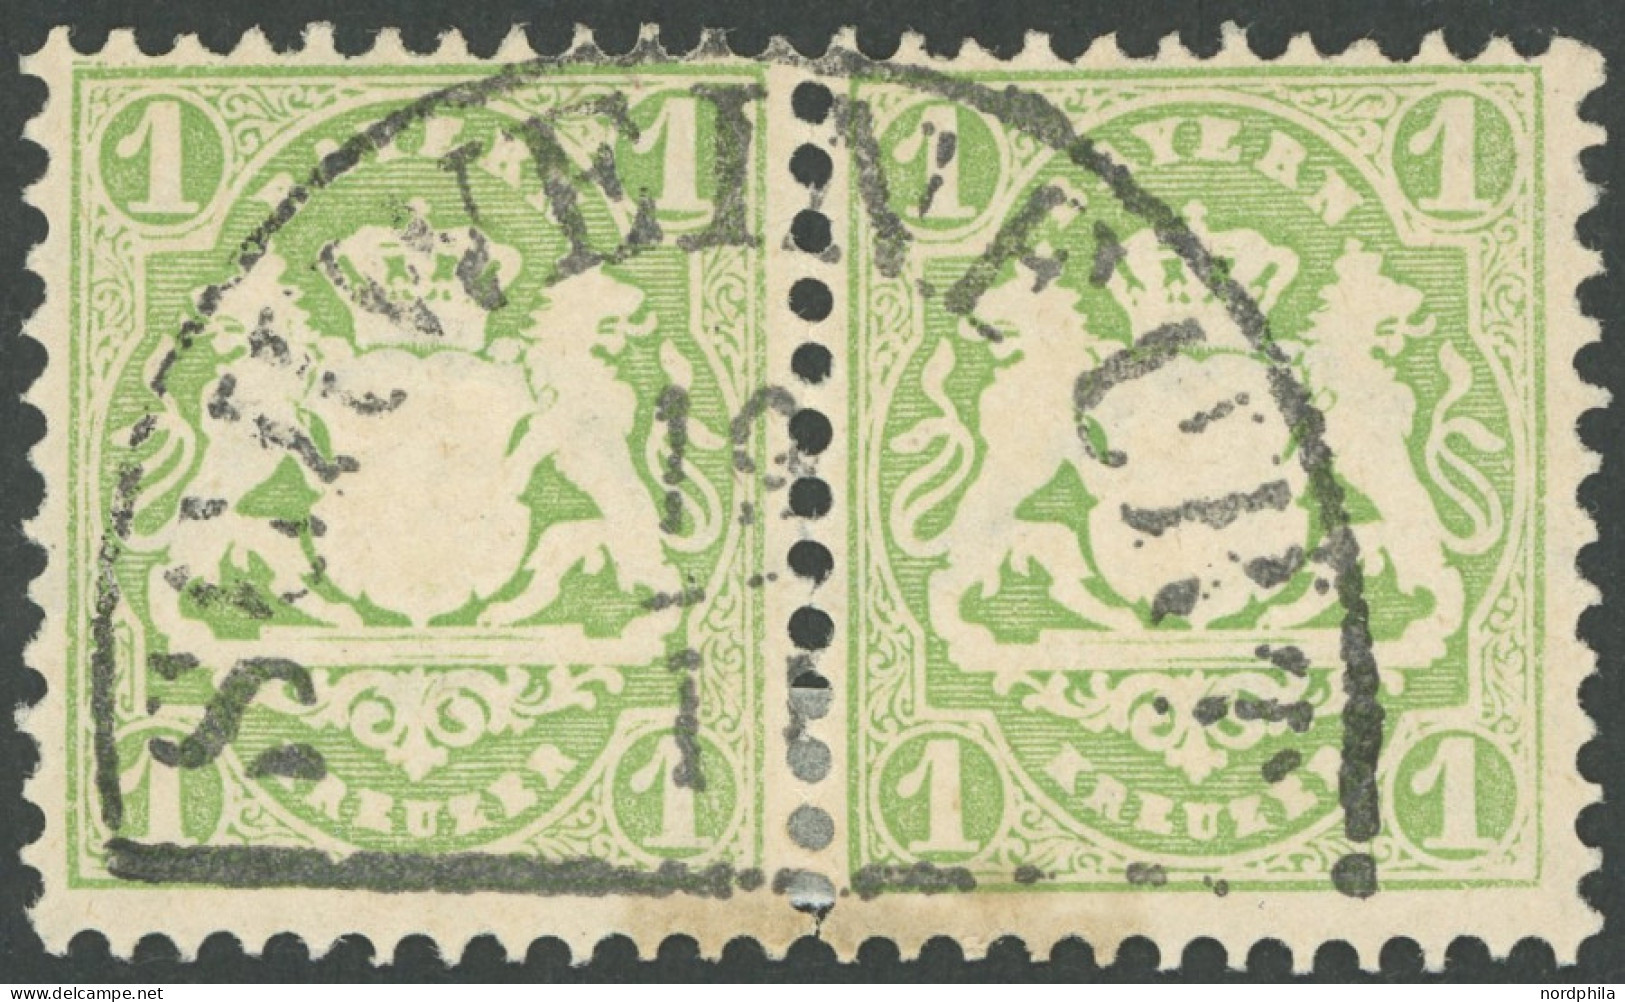 BAYERN 32a Paar O, 1875, 1 Kr. Hellgrün Im Waagerechten Paar (leicht Angetrennt), Wz. 2, Zentrischer Segmentstempel SCHW - Afgestempeld